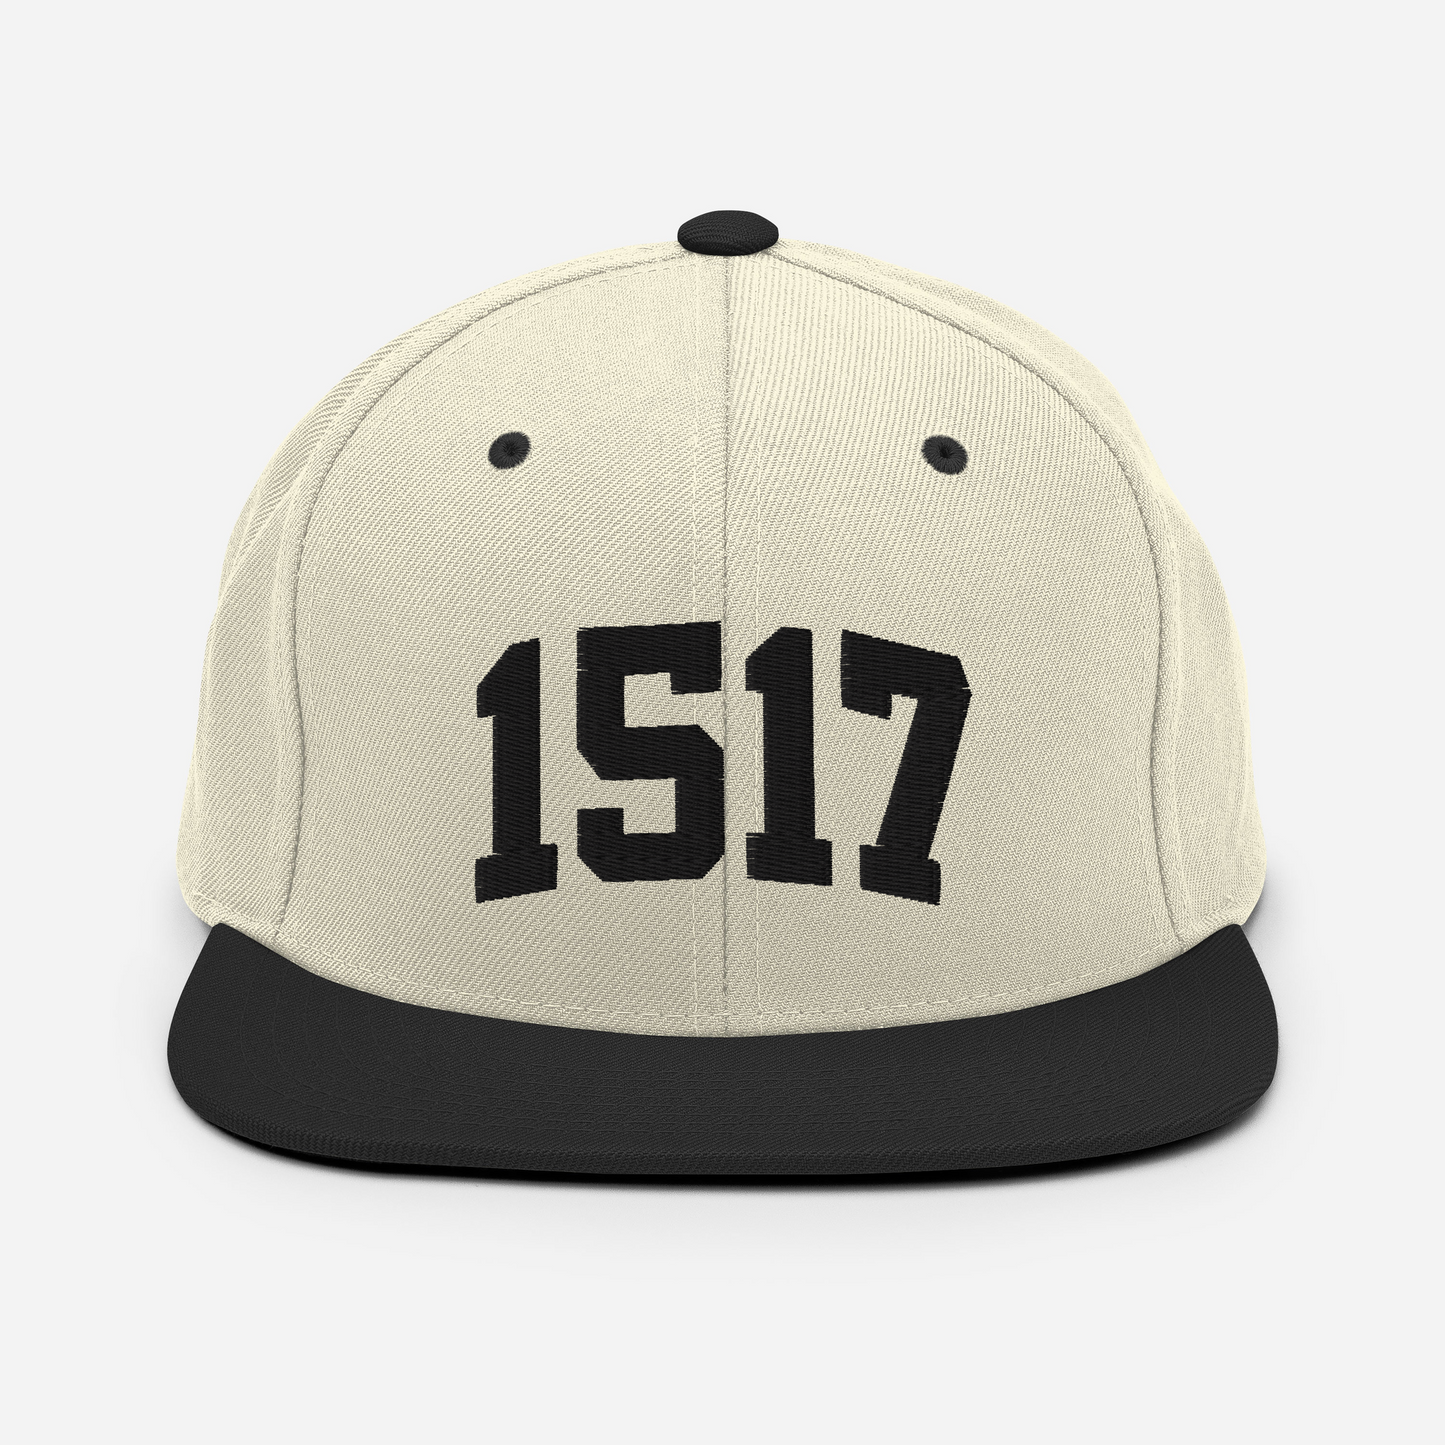 1517 Snapback Hat